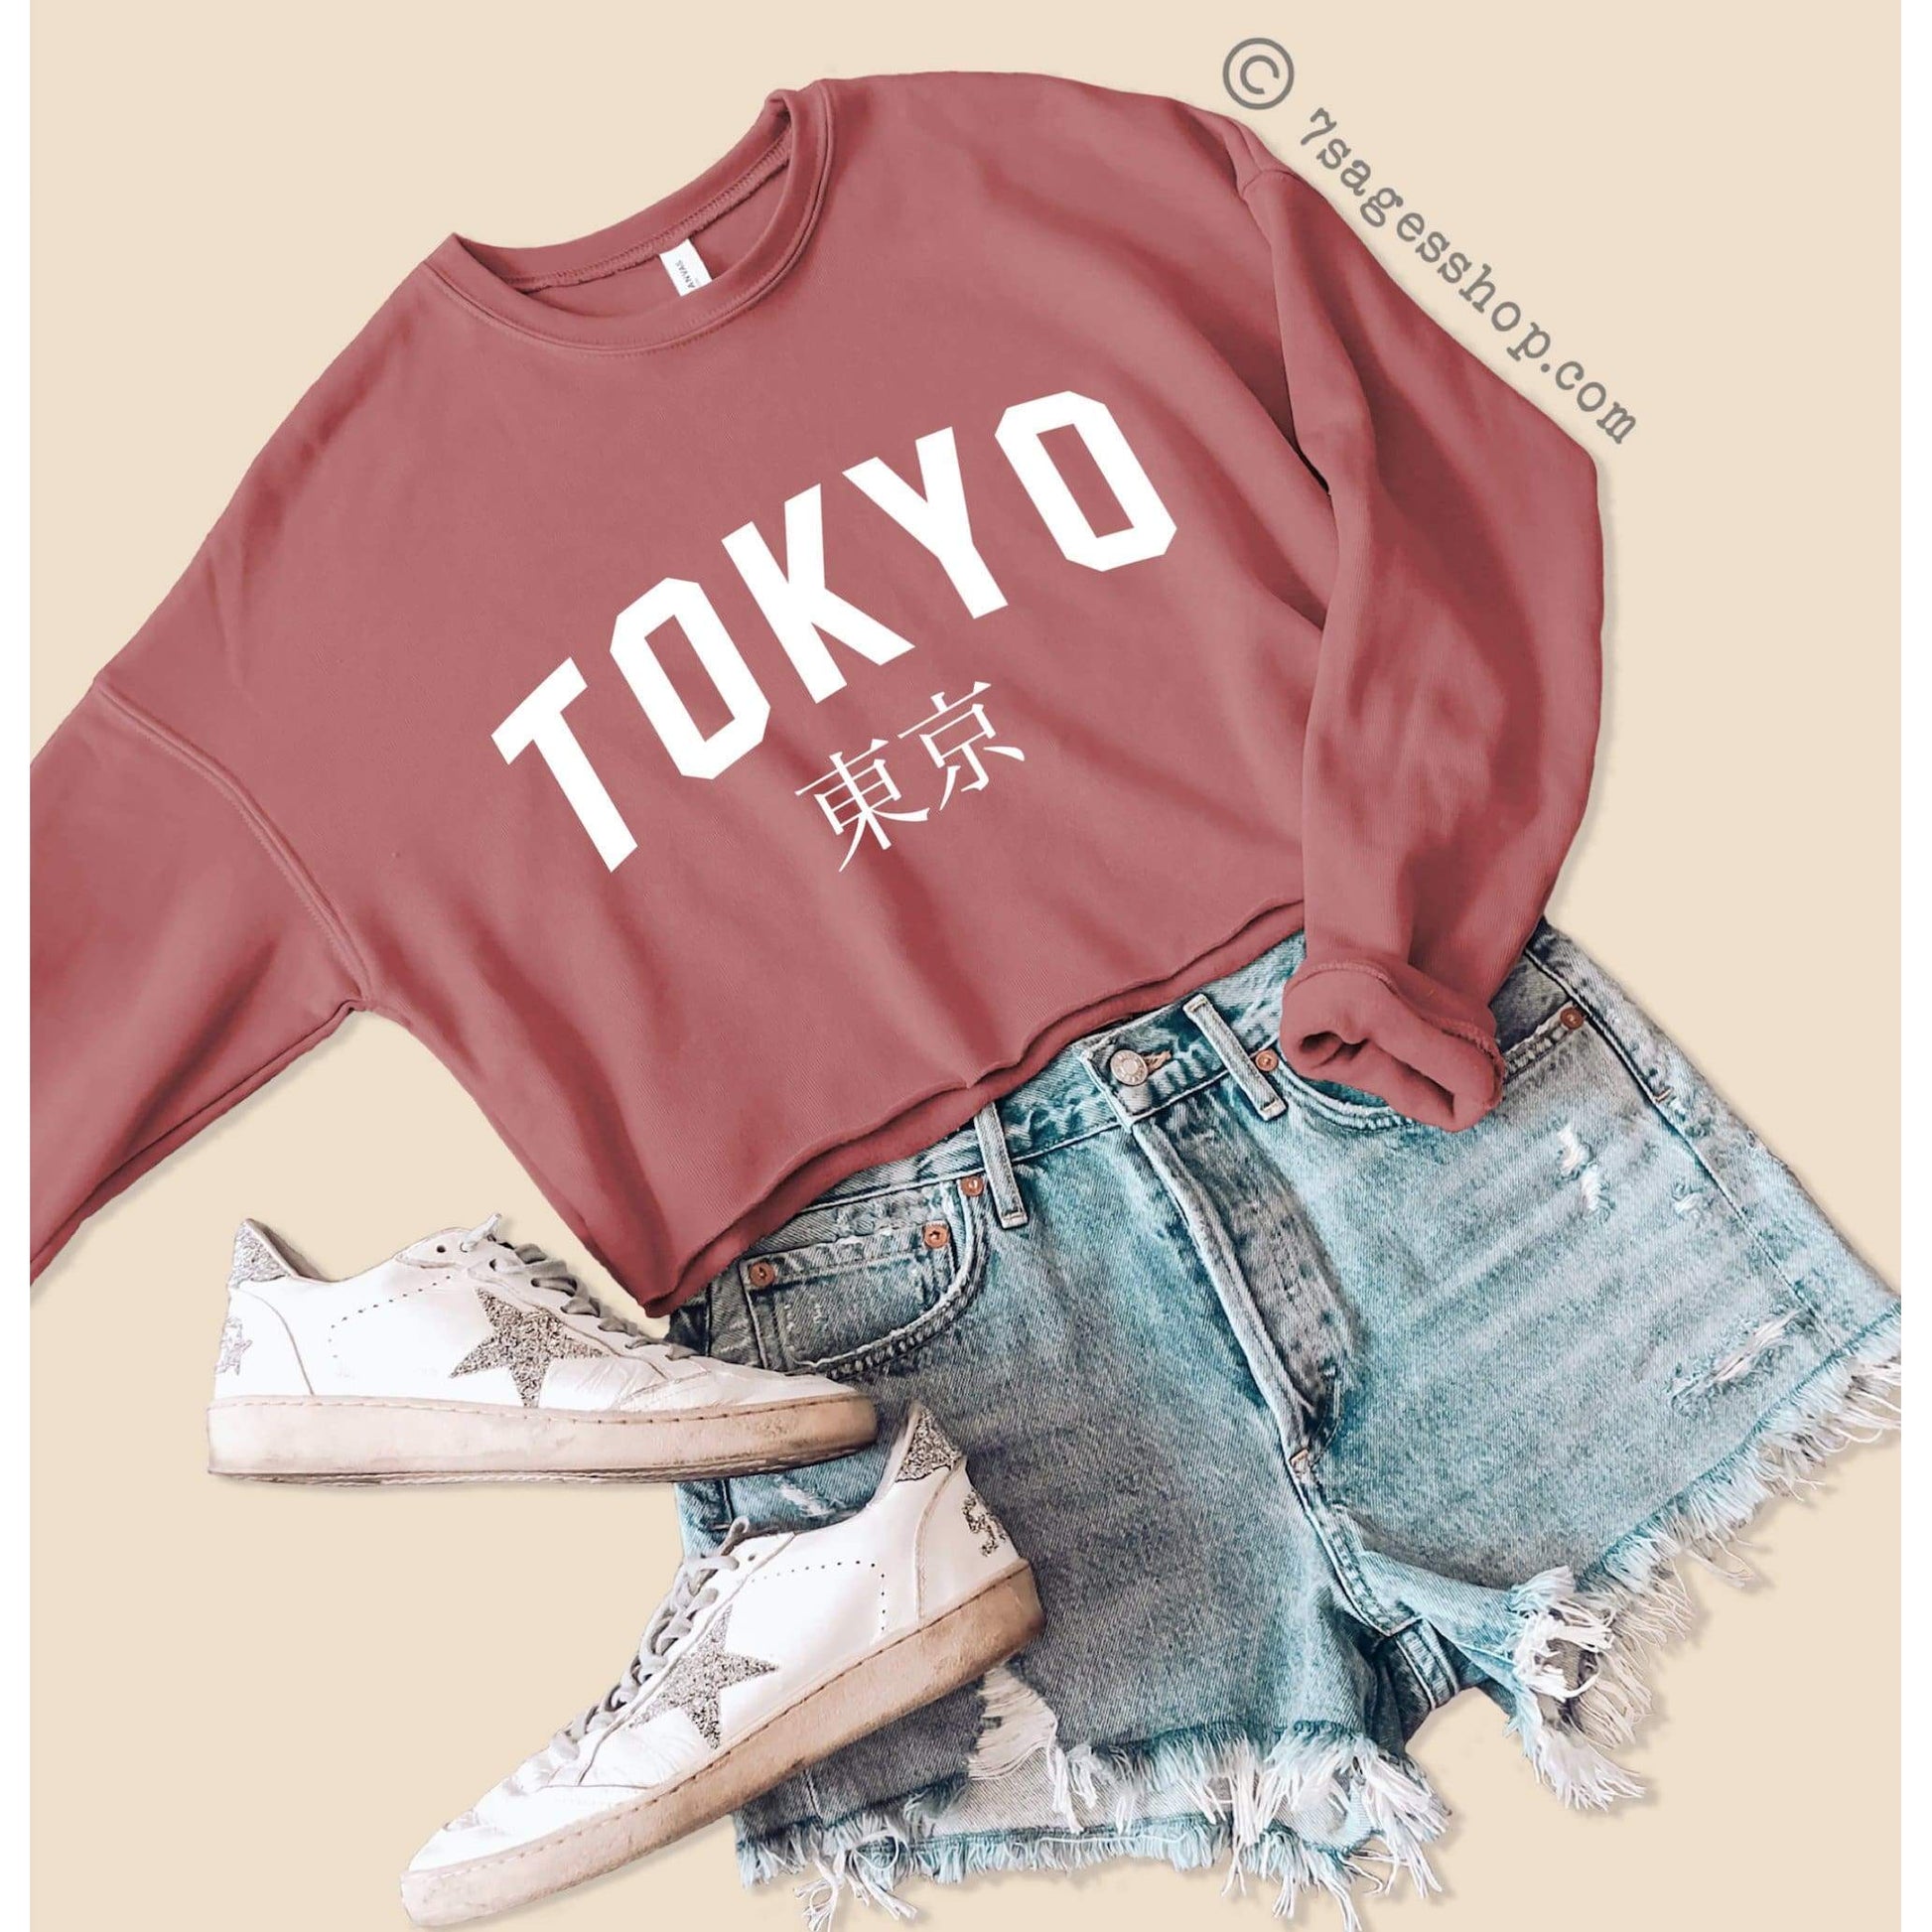 Tokyo Cropped Sweatshirt - Tokyo Sweatshirt - Japan Sweatshirts - Tokyo Shirt - Japan Shirt - Fleece Crewneck Sweater